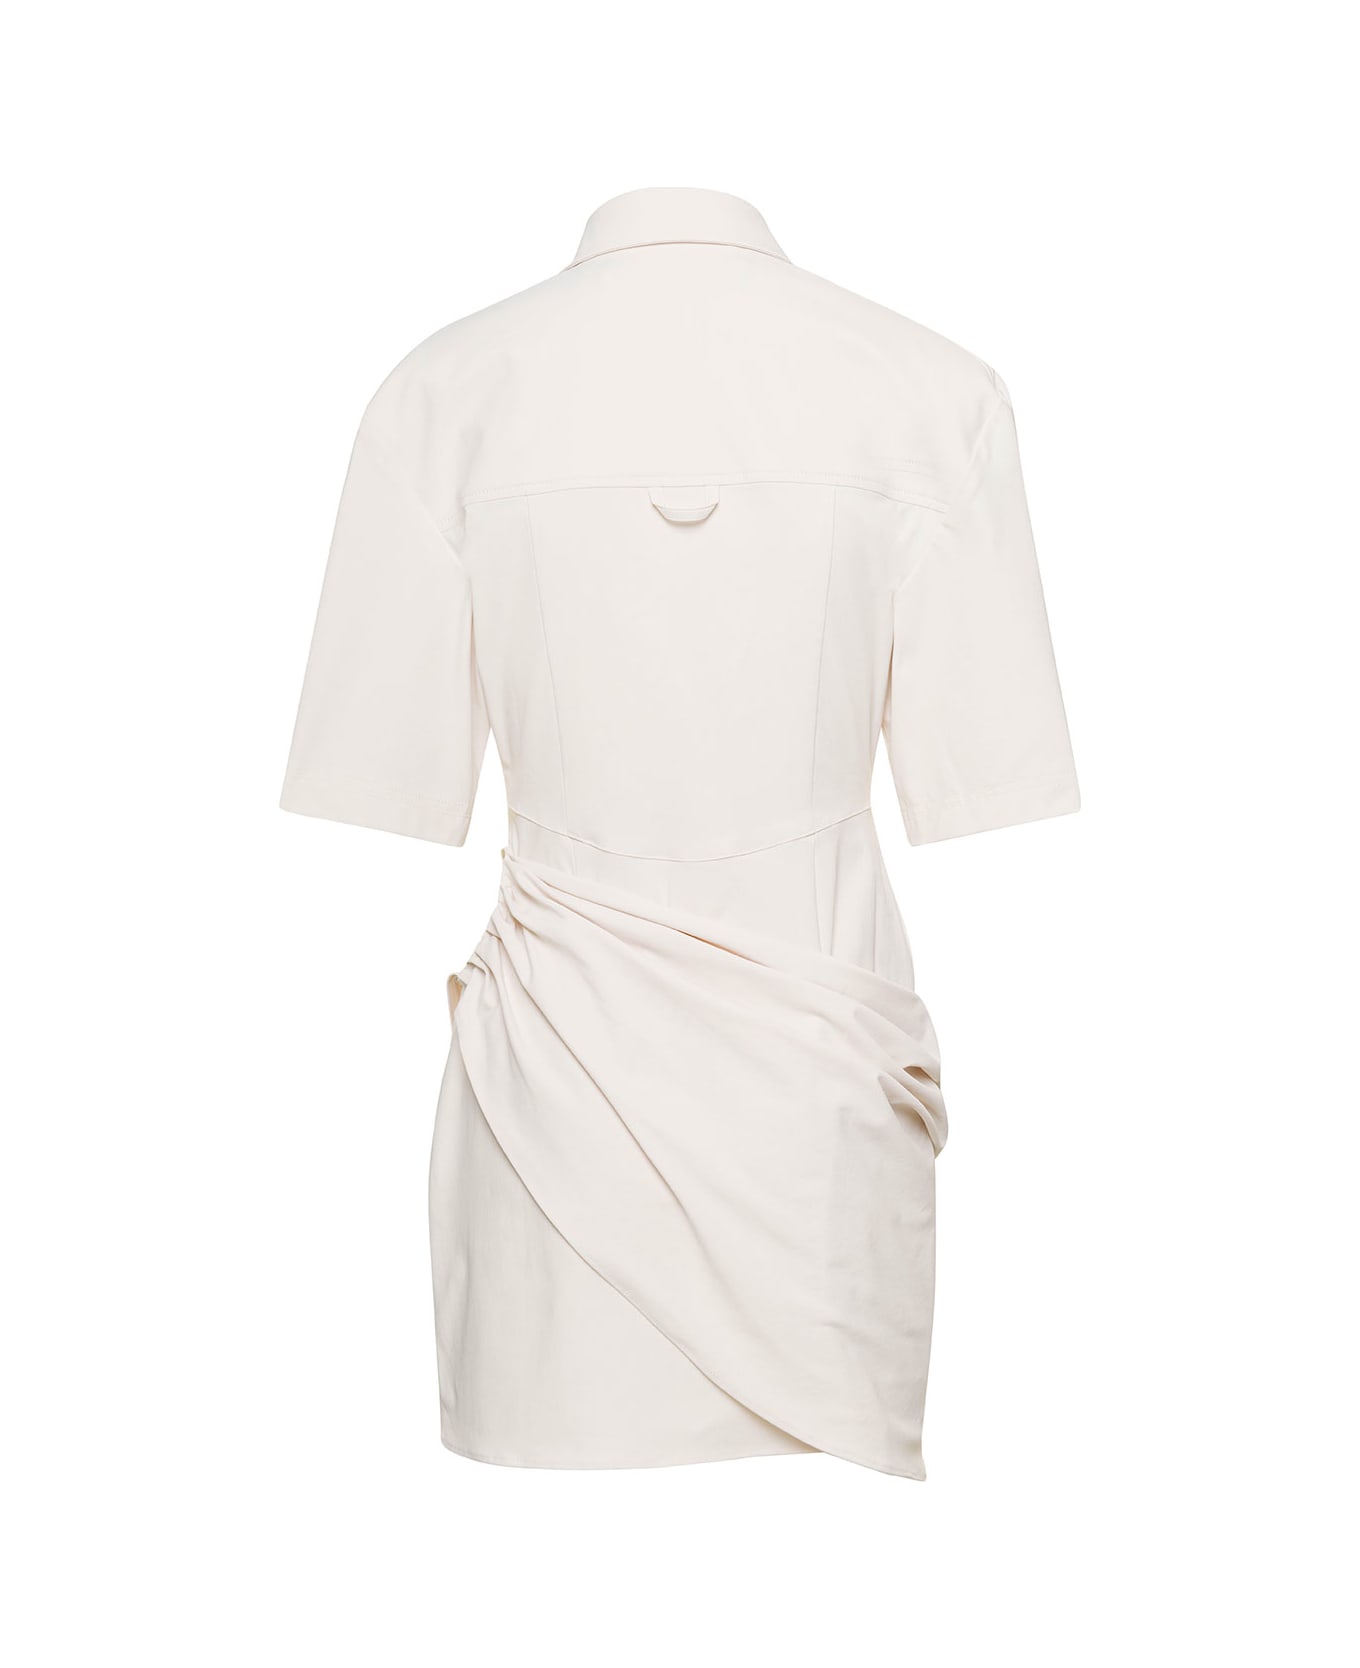 Jacquemus White Shirt Dress La Robe Camisa In Cotton Blend Woman - White